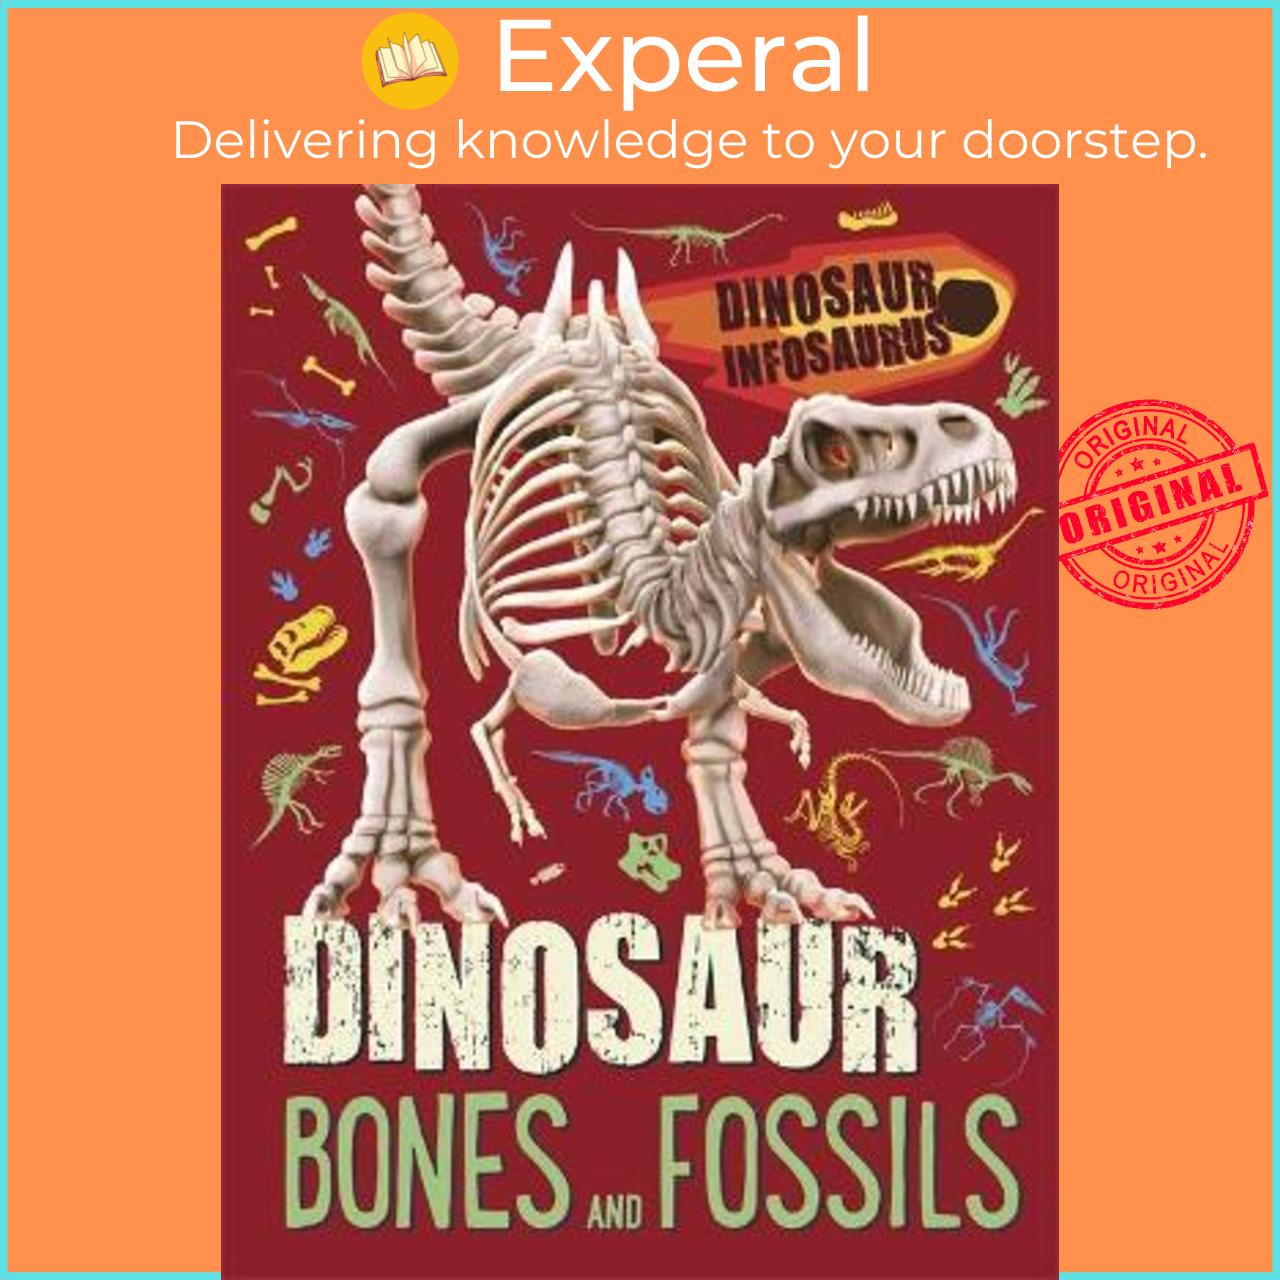 Sách - Dinosaur Infosaurus: Dinosaur Bones and Fossils by Katie Woolley (UK edition, paperback)